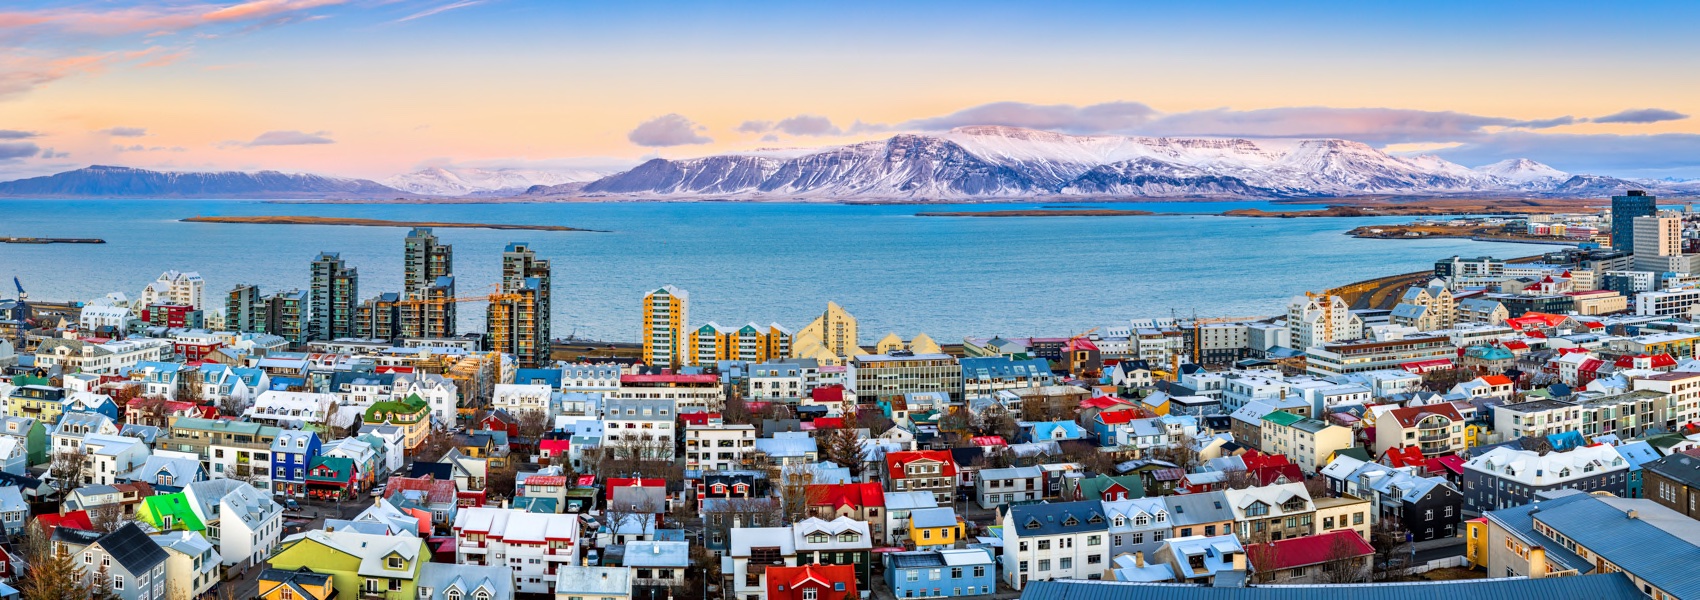 Panorama de Reykjavik